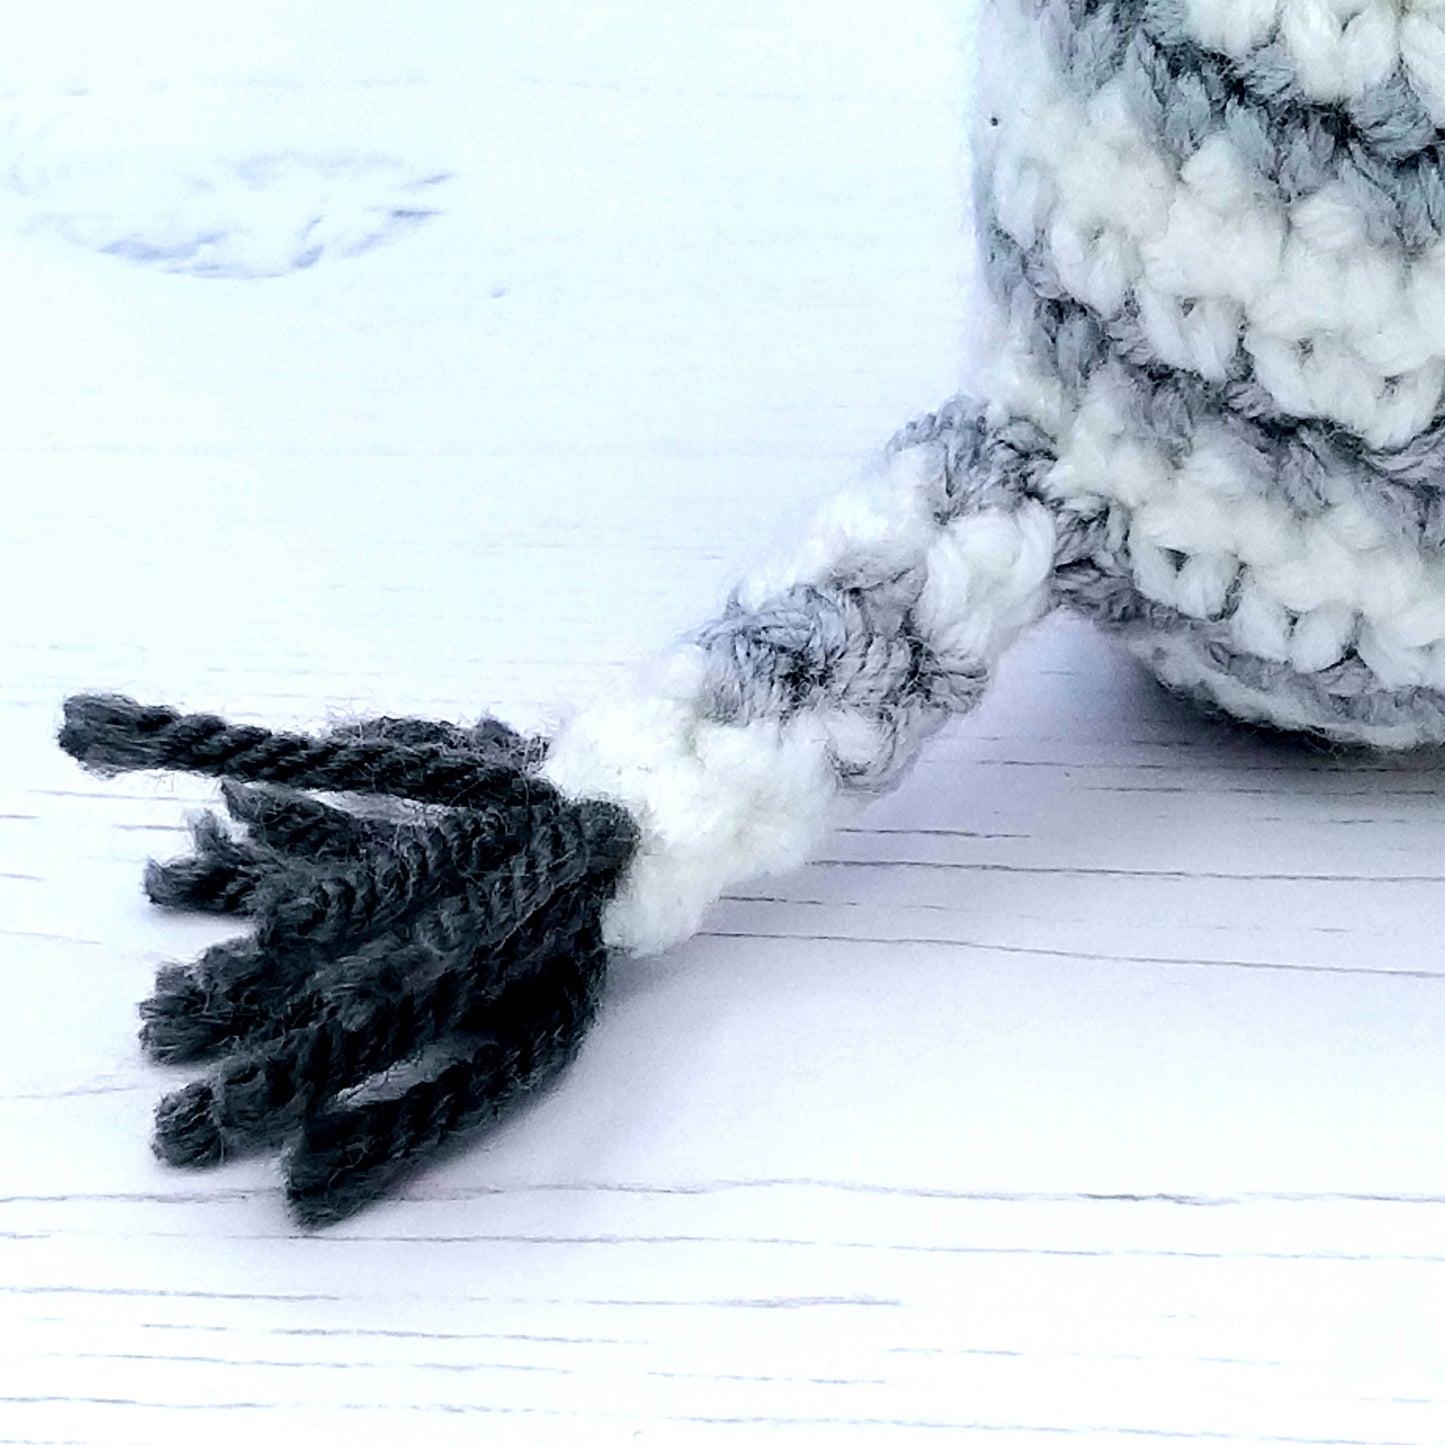 Baby Zebra - PDF Crochet Pattern